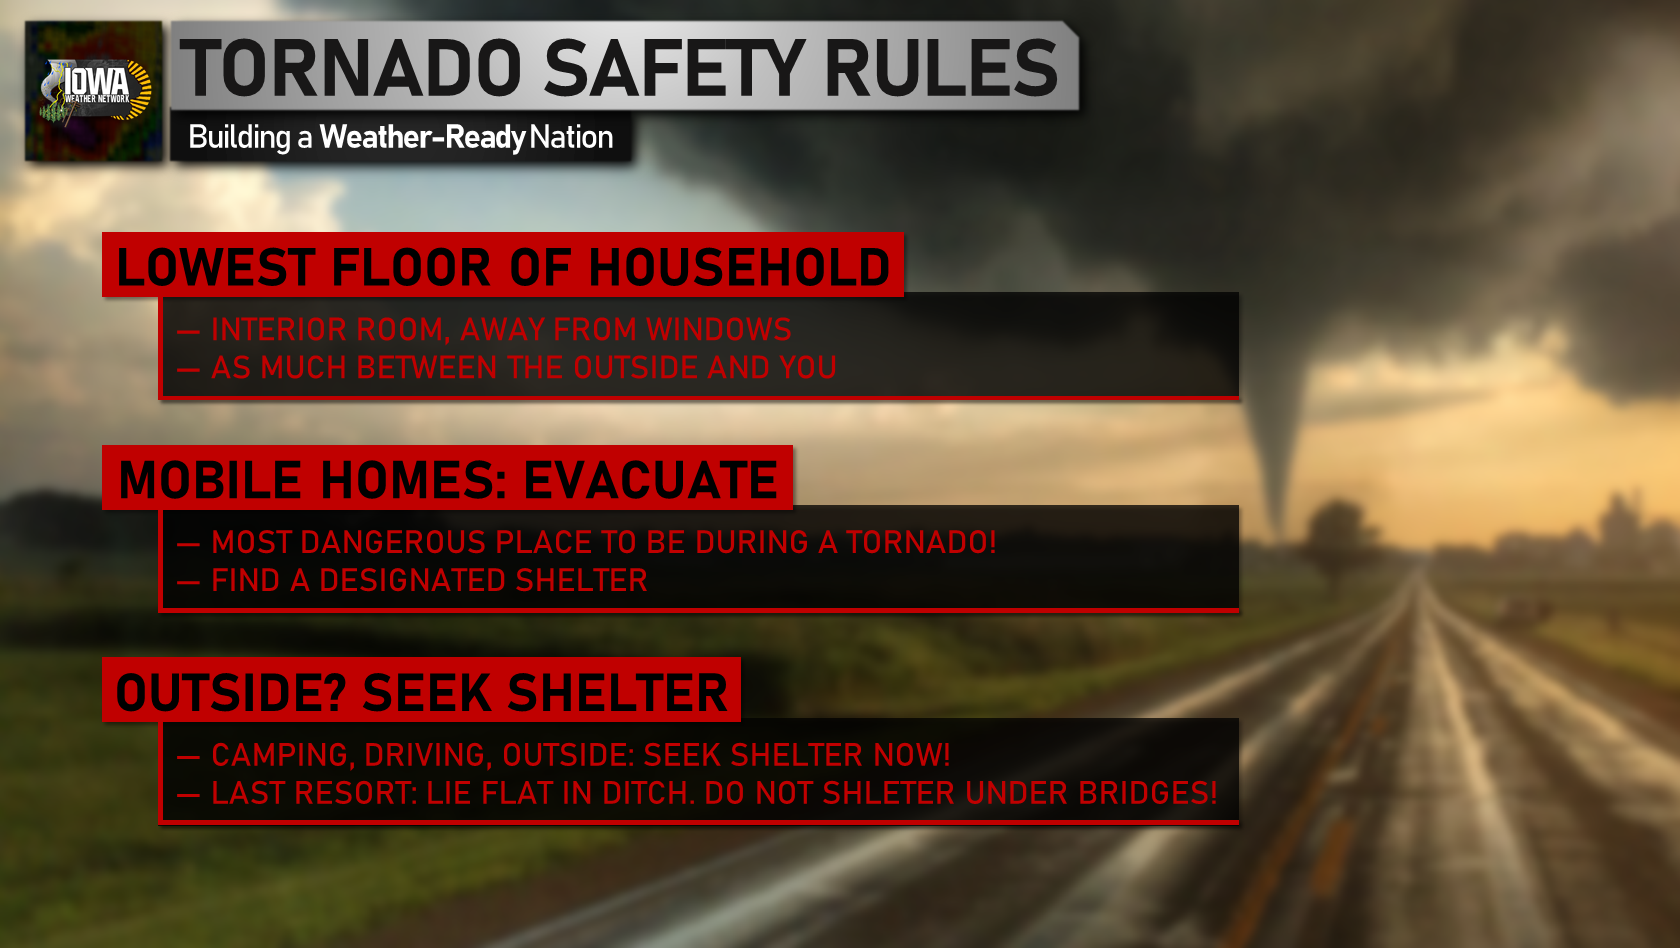 Tornado safety tips